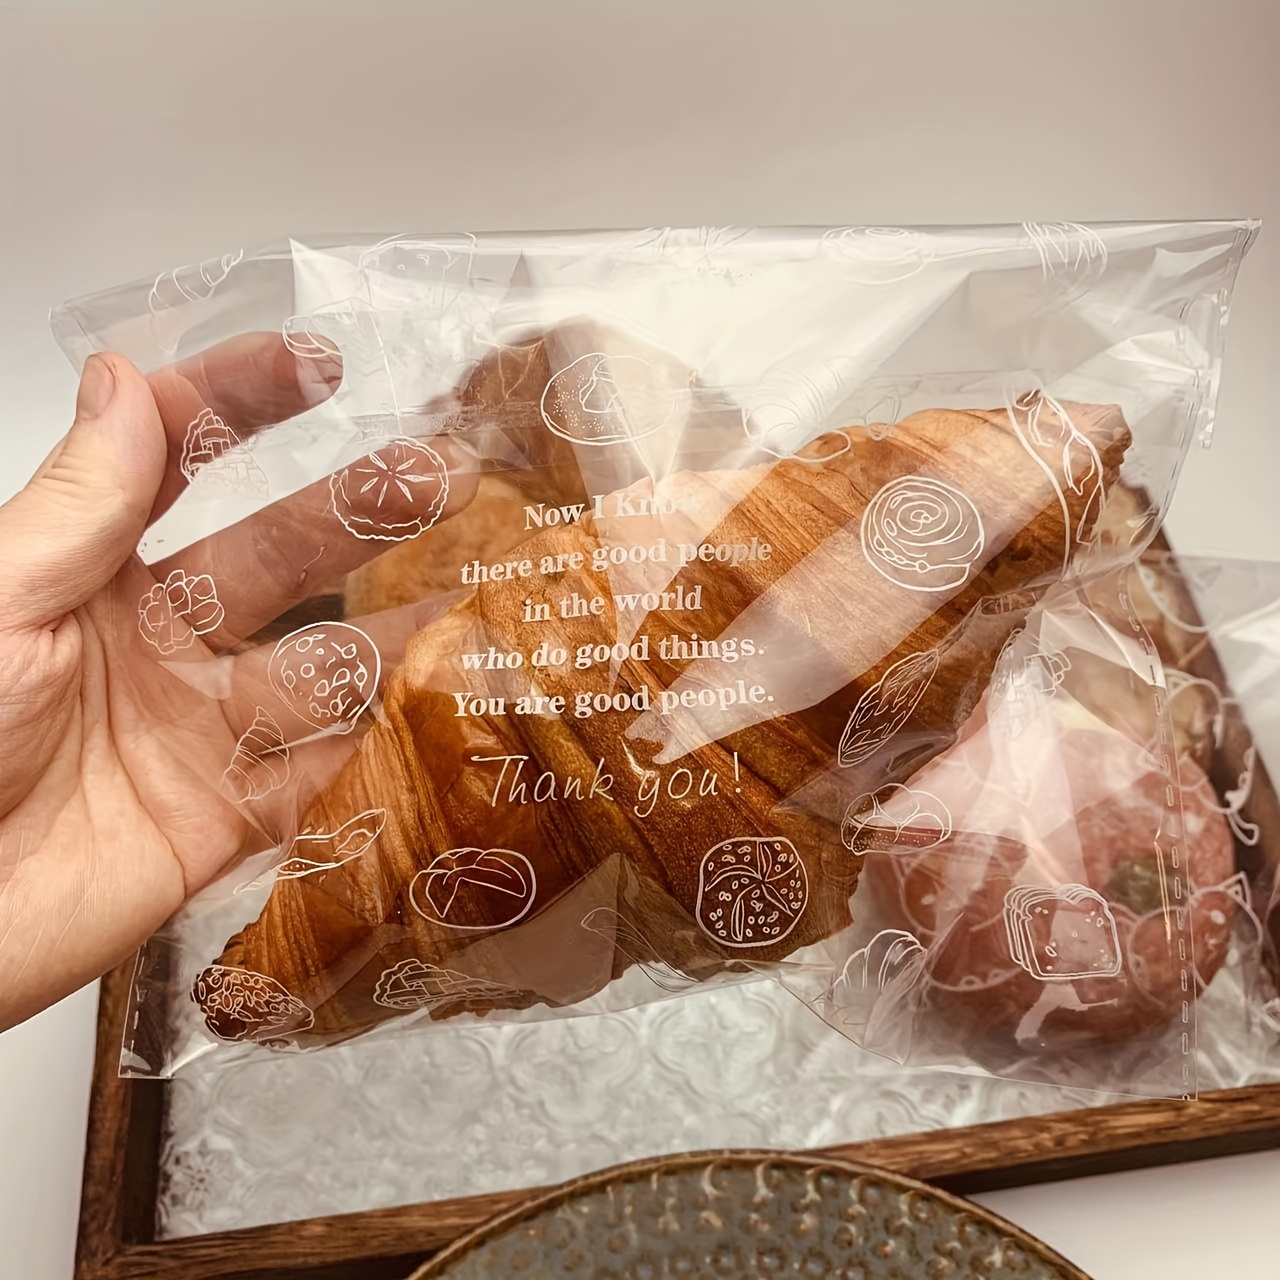  100 Pcs Reusable Plastic Bread Clips - Keep Your Food